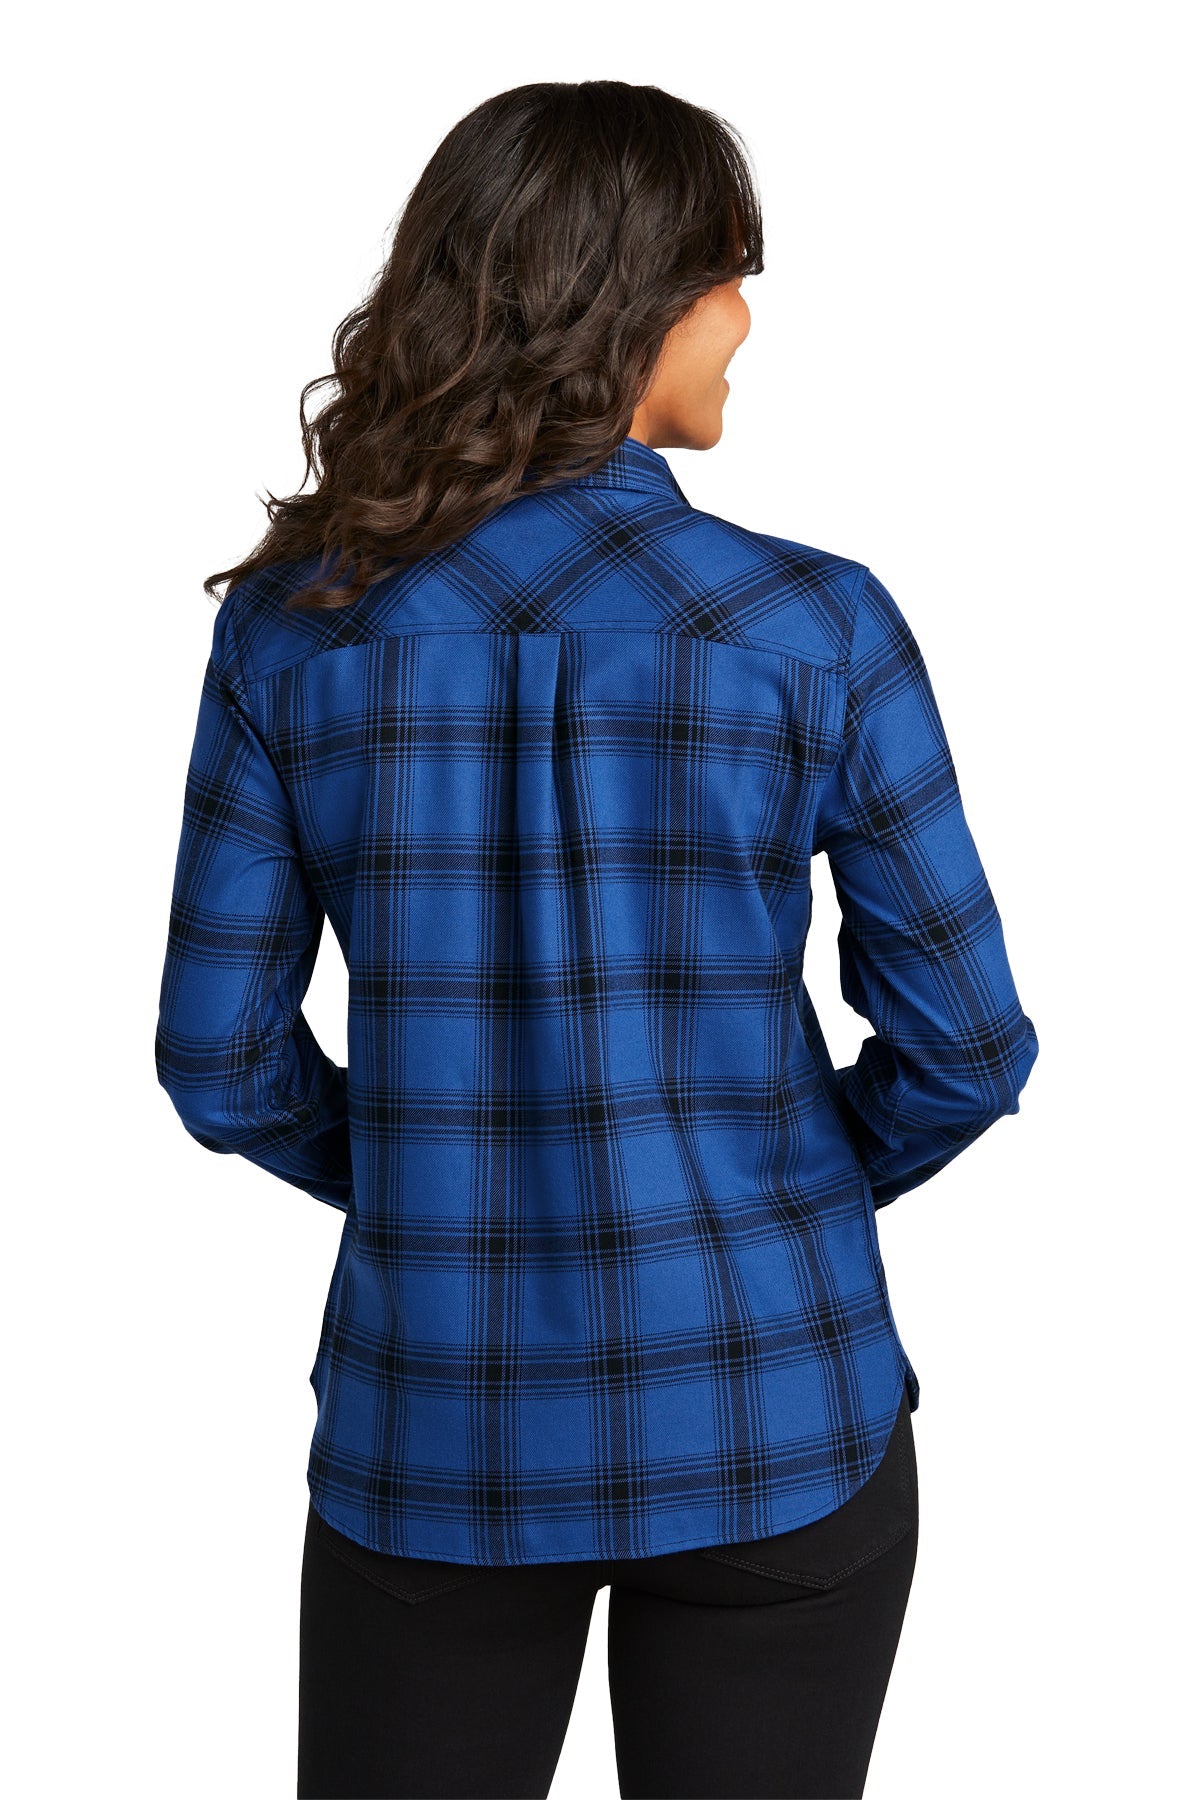 Port Authority Ladies Customized Plaid Flannel Shirts, Royal/ Black Open Plaid